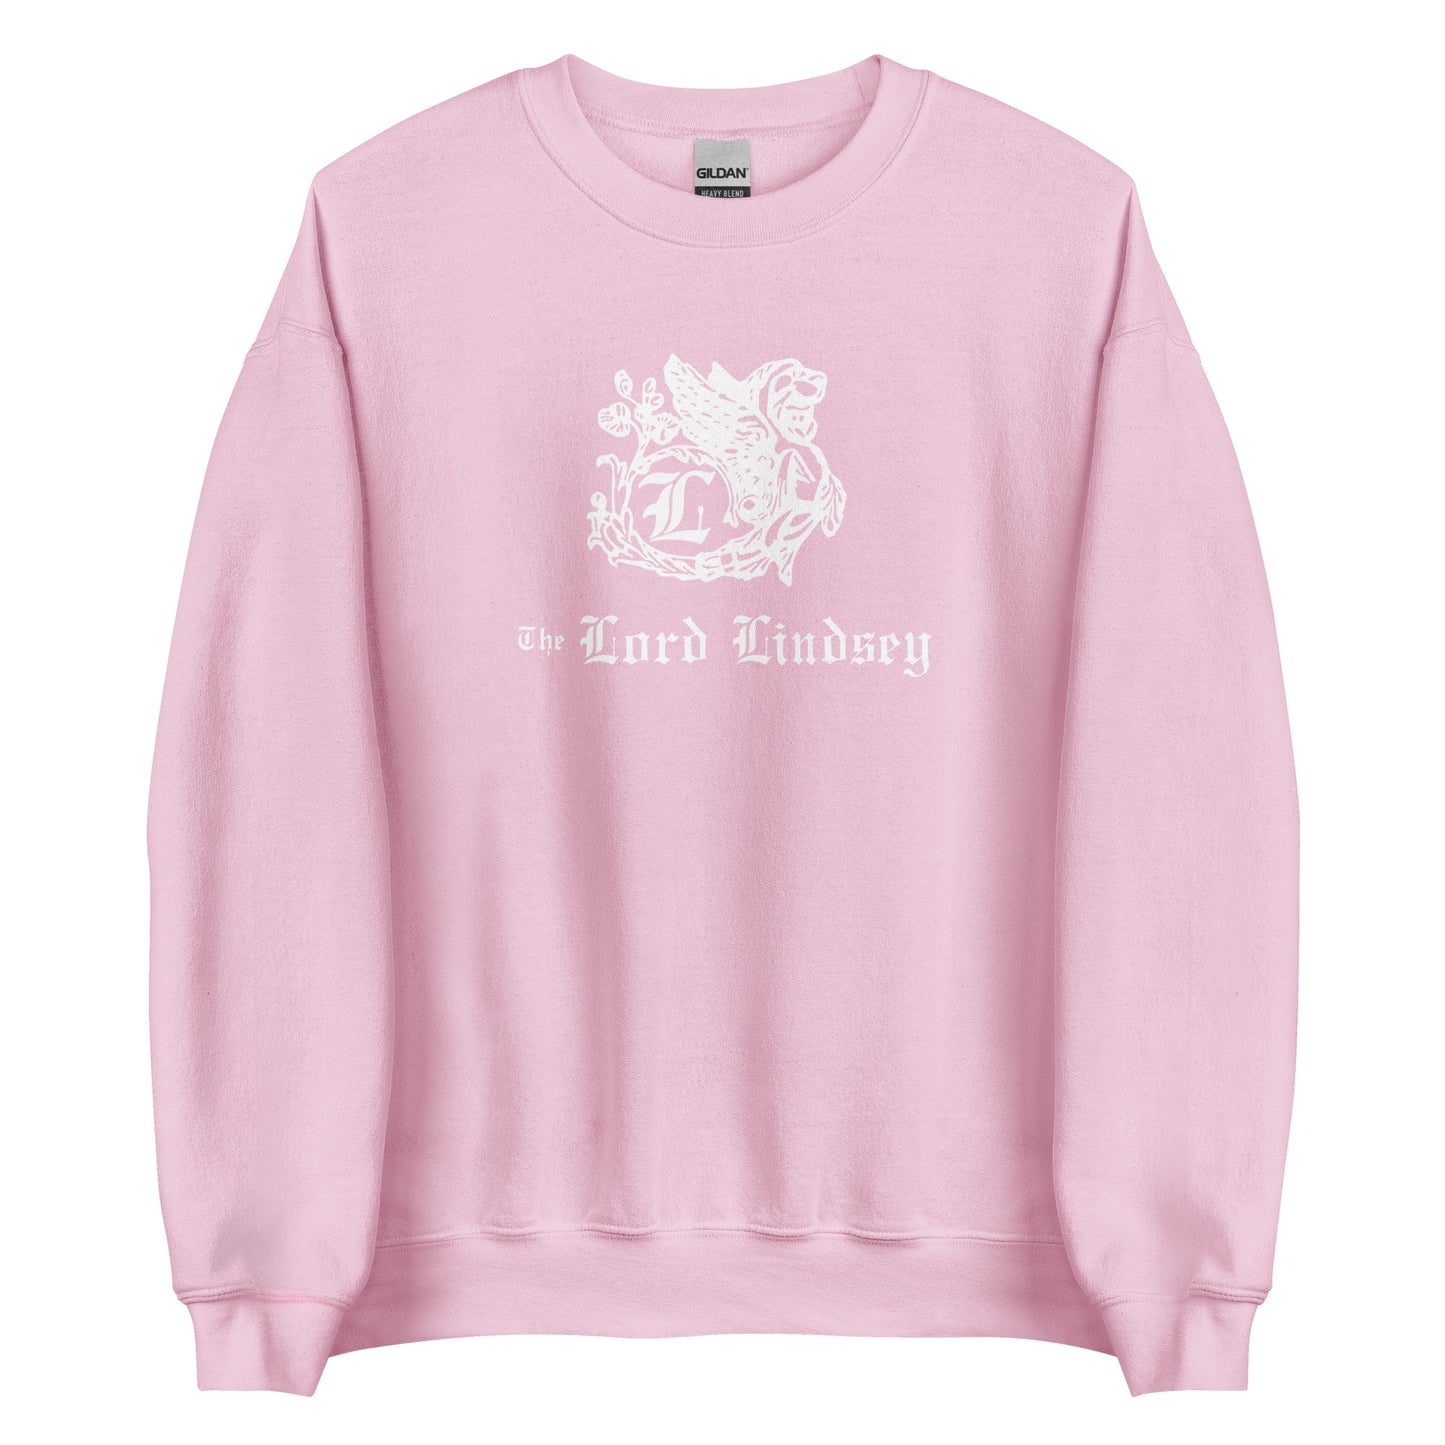 Lord Lindsey unisex printed sweatshirt